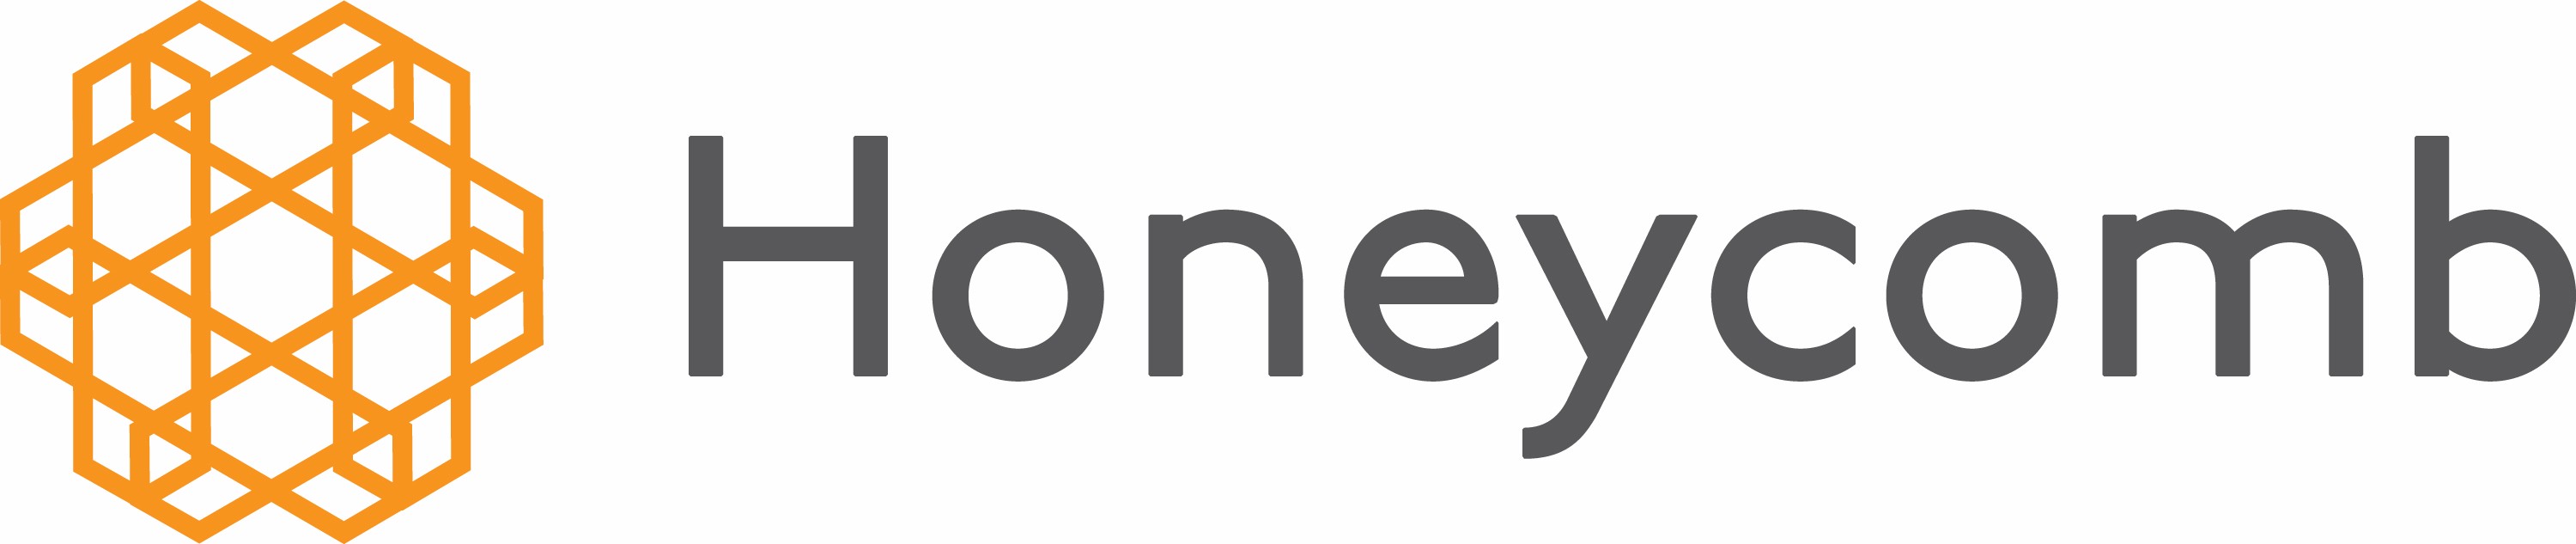 Honeycomb Investment Trust Plc